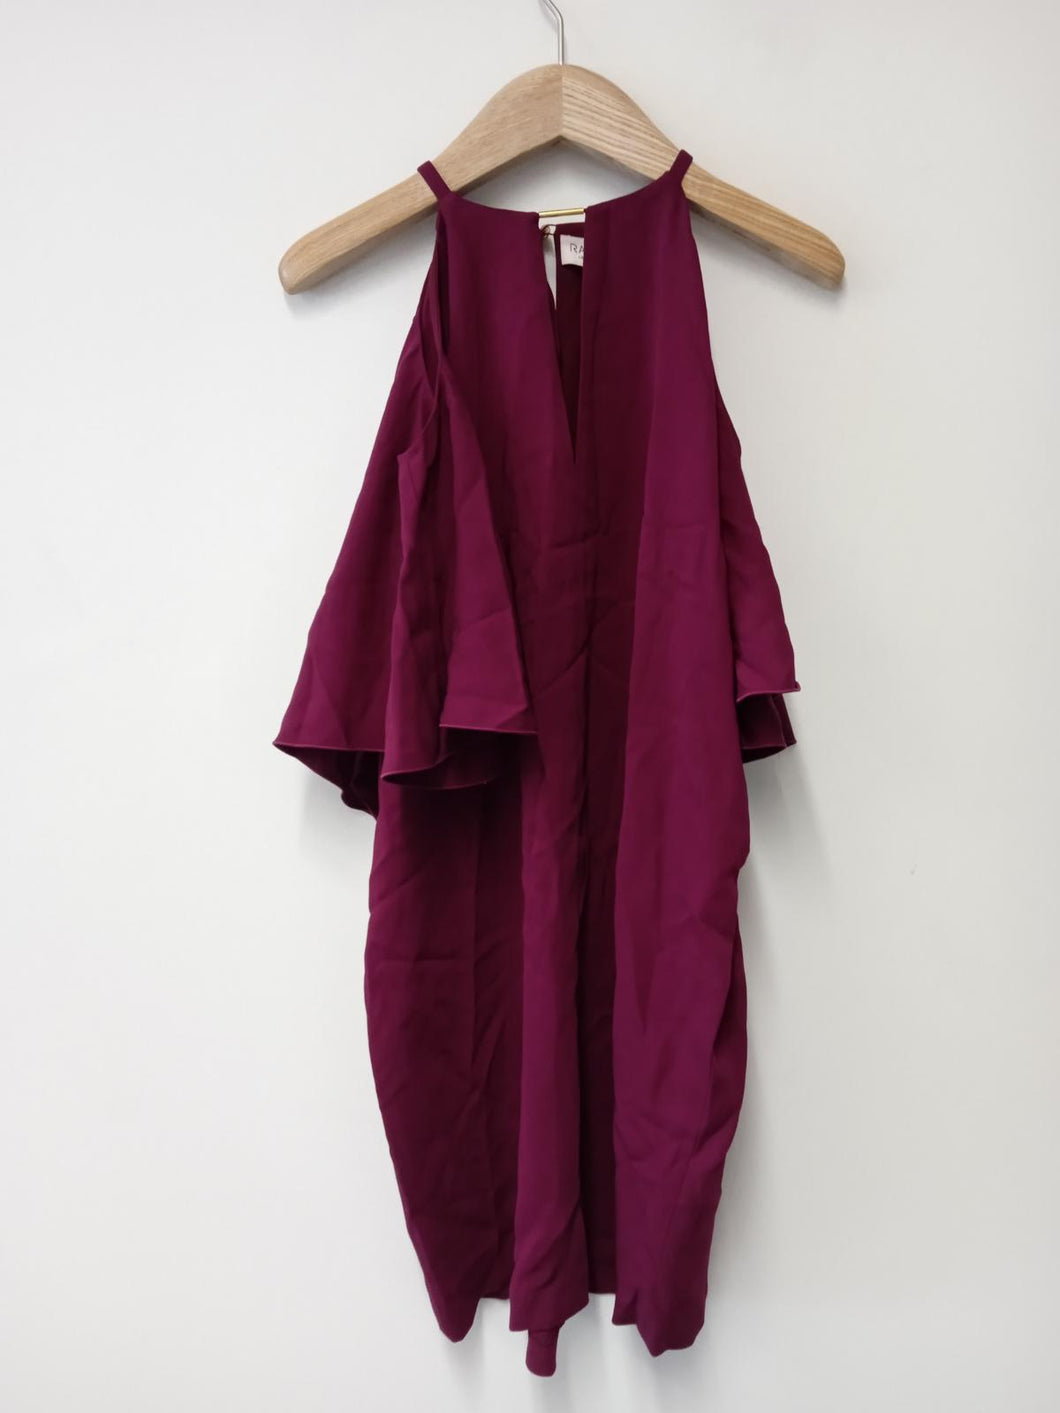 RACHEL ZOE Ladies Burgundy Short Sleeve Round Neck Dress Size UK6 NEW